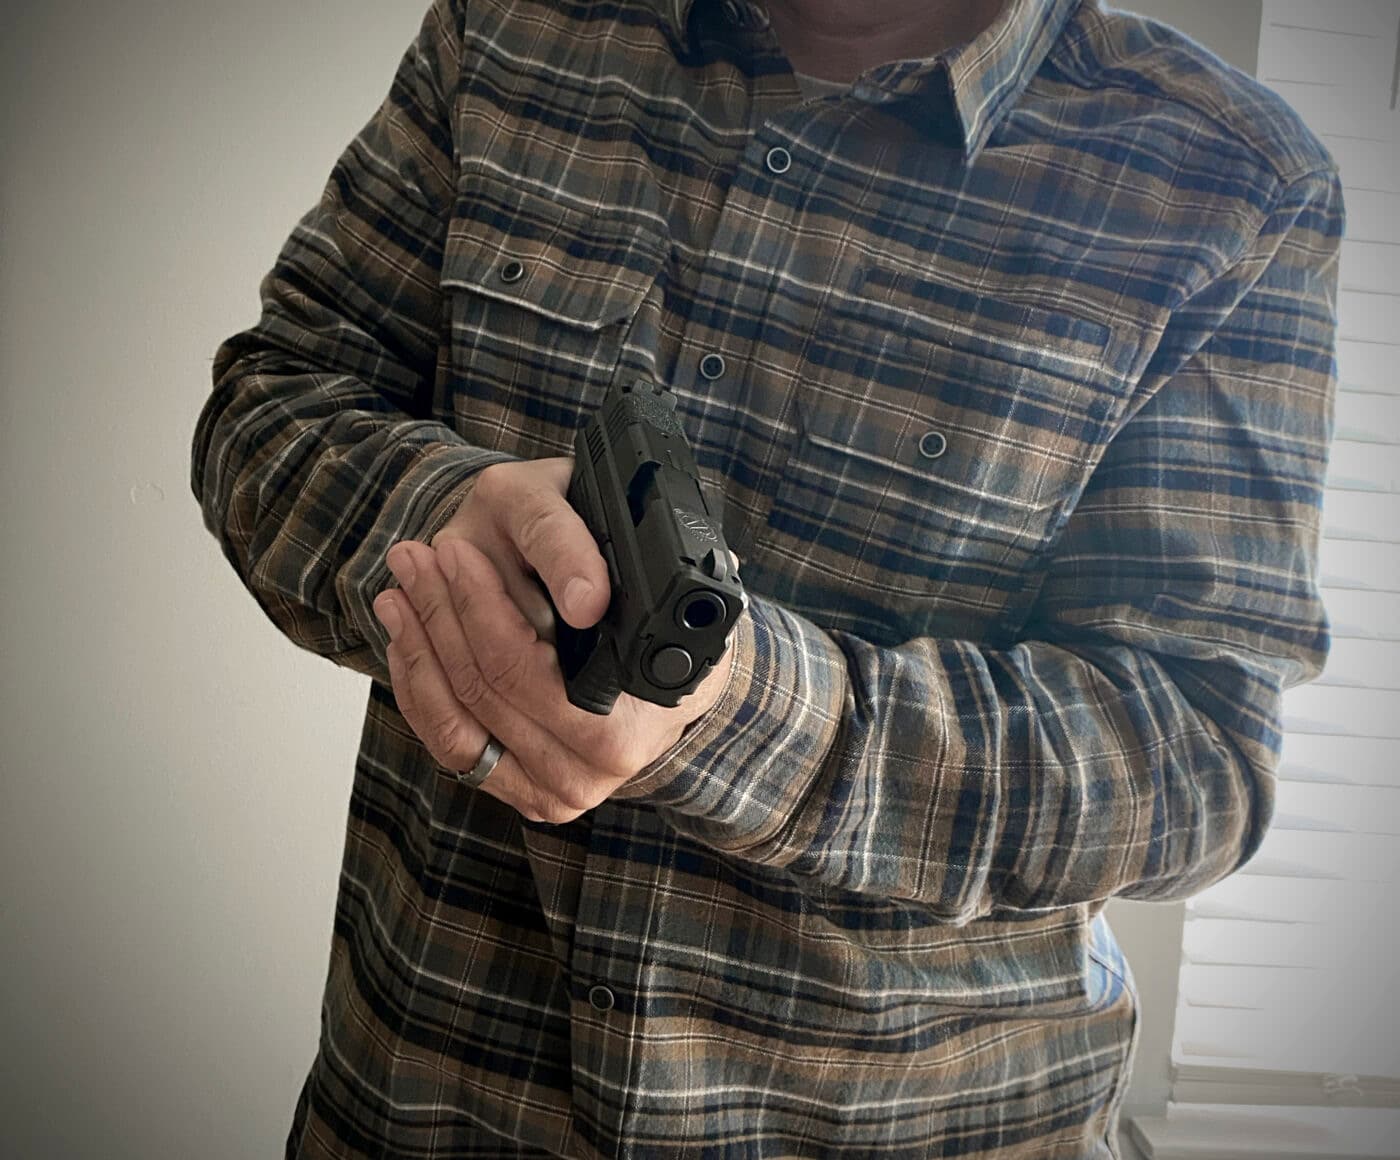 Man carrying a Springfield XD Sub-Compact gun